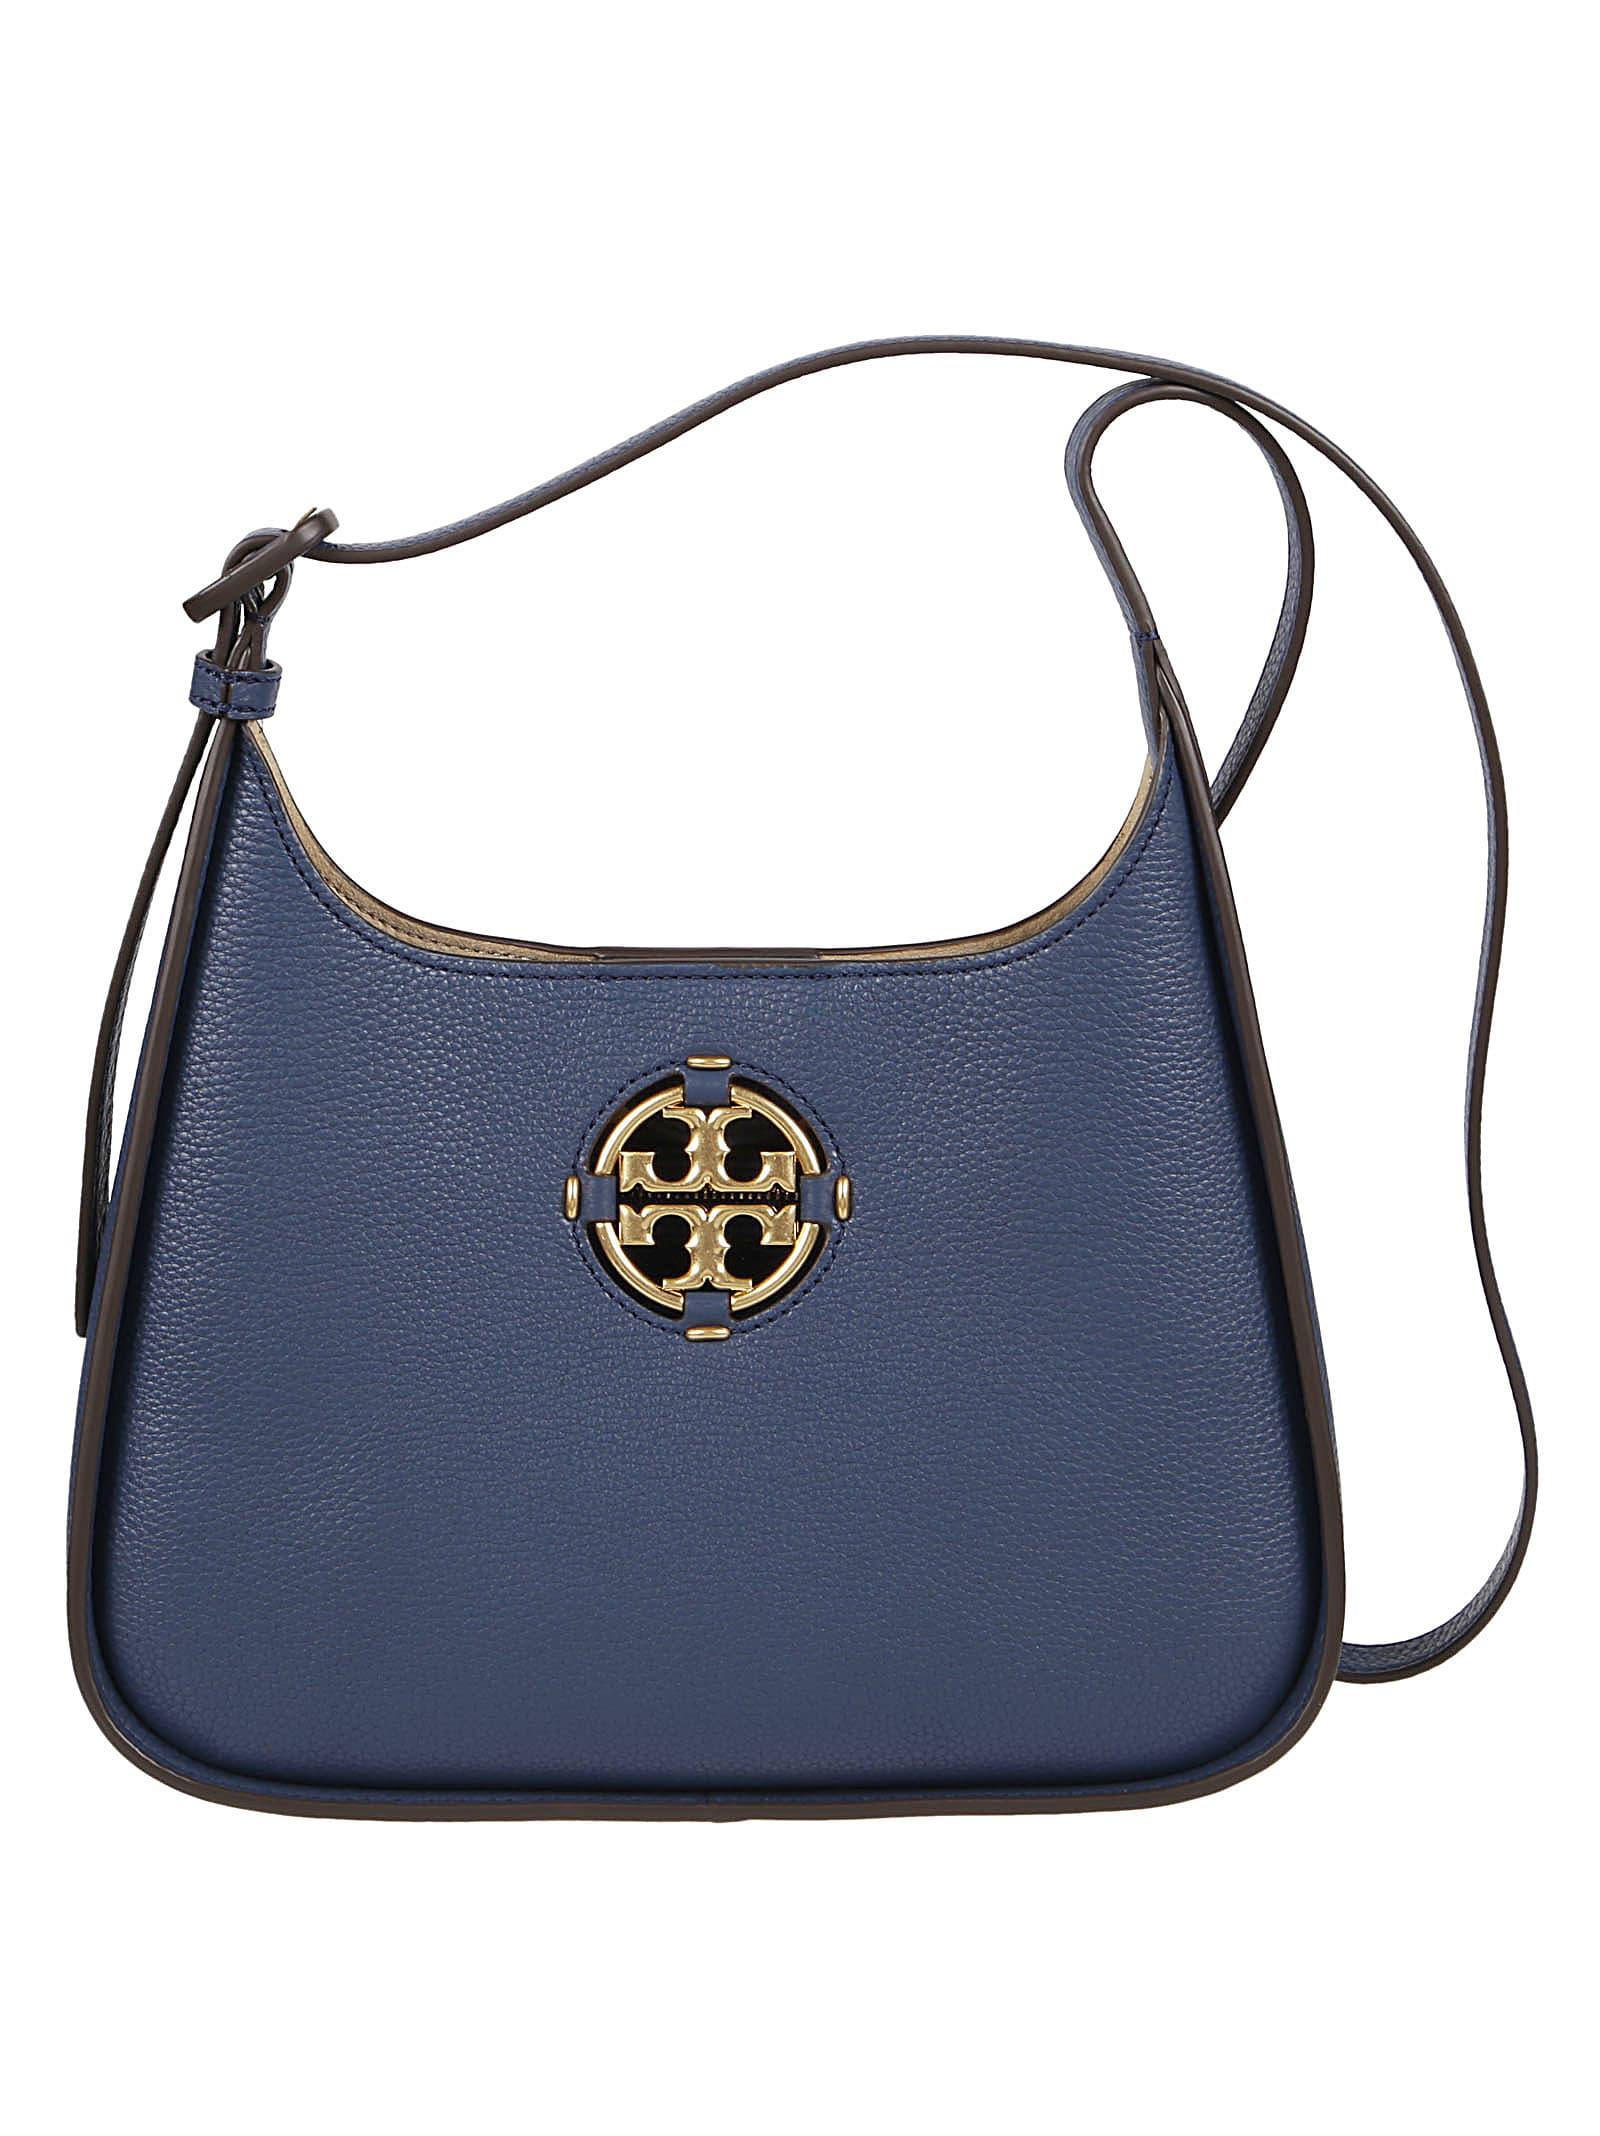 Tory Burch Miller Small Leather Shoulder Bag/ Blue/$448